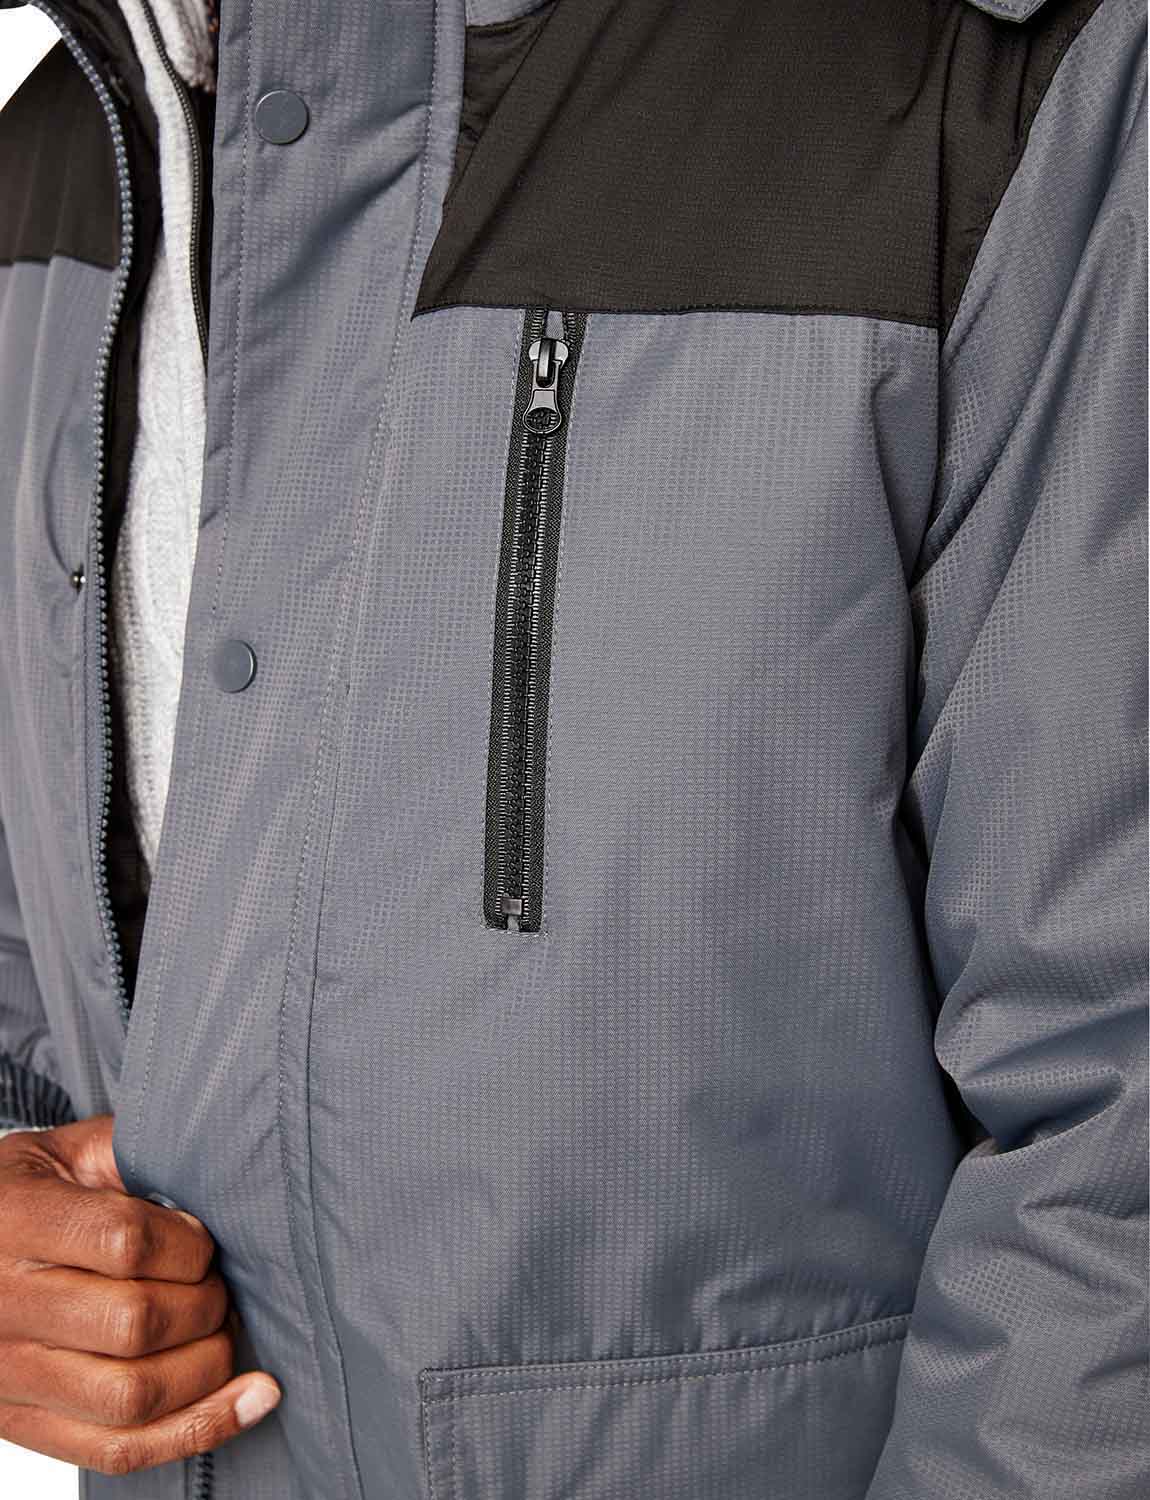 Pegasus woven waterproof jacket with fleece lining | eBay